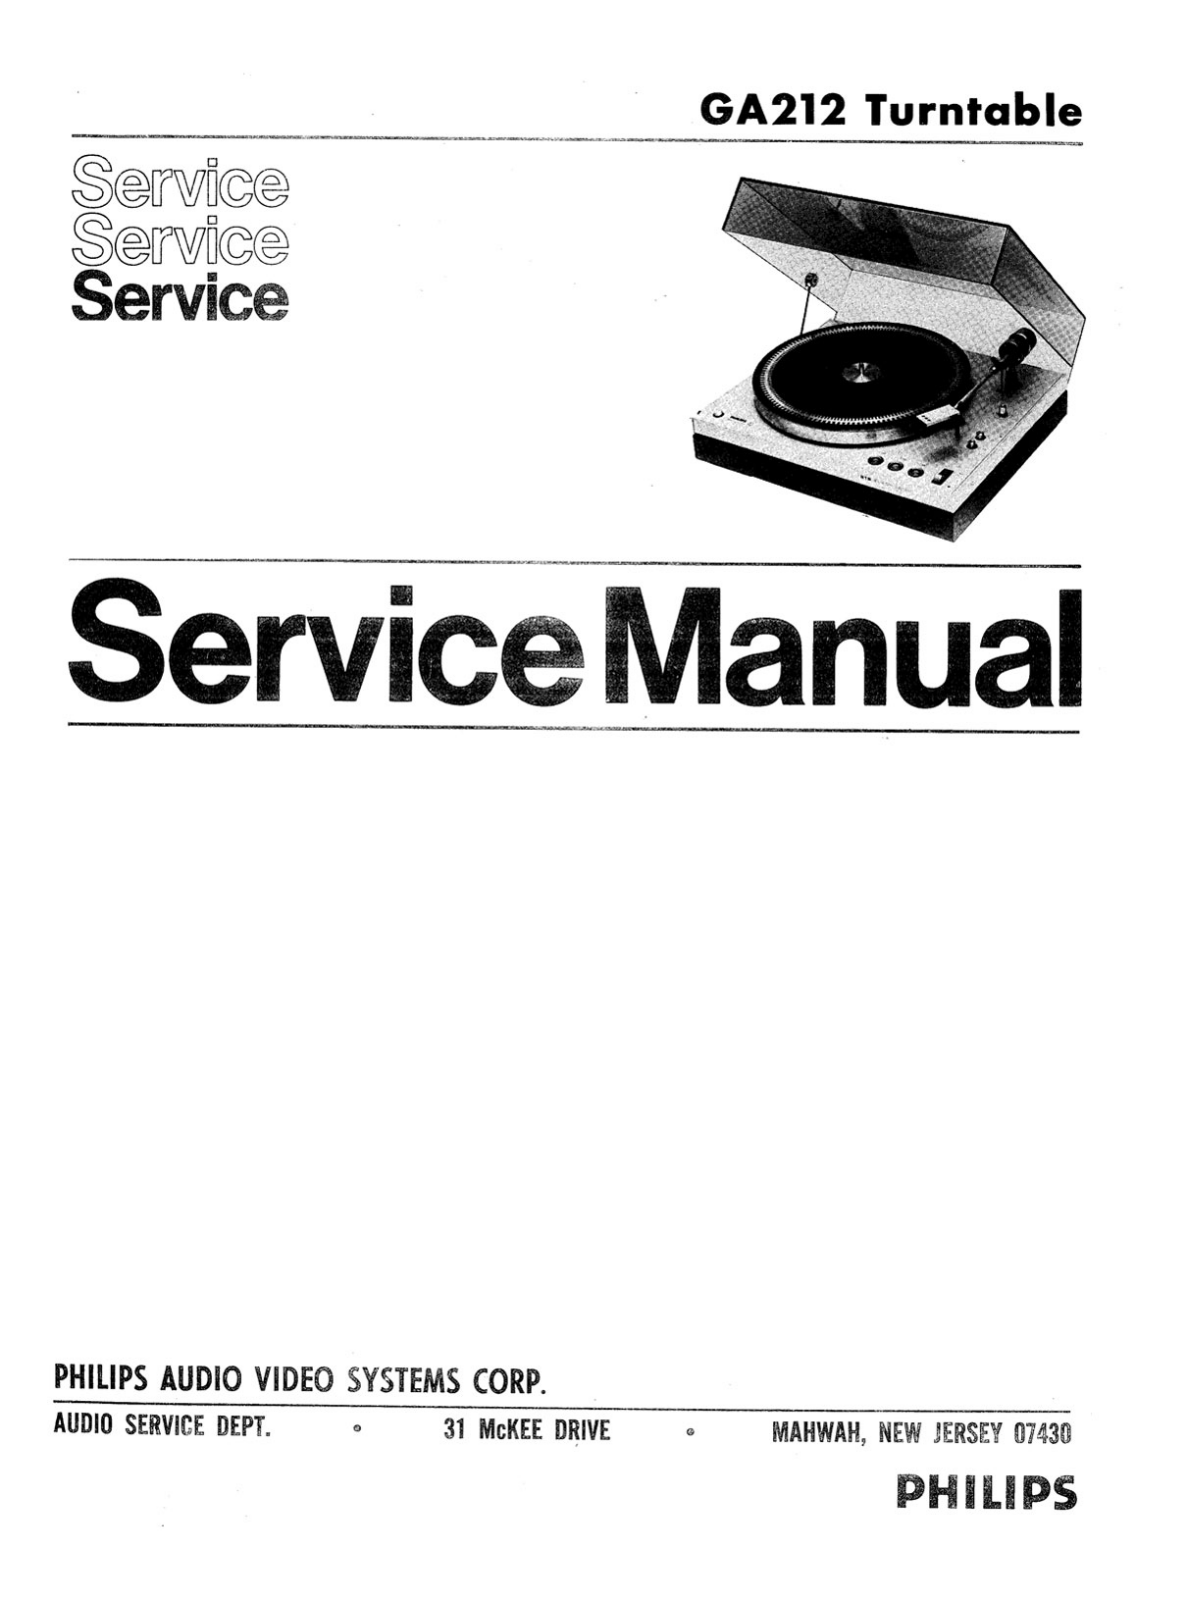 Philips GA-212 Service manual